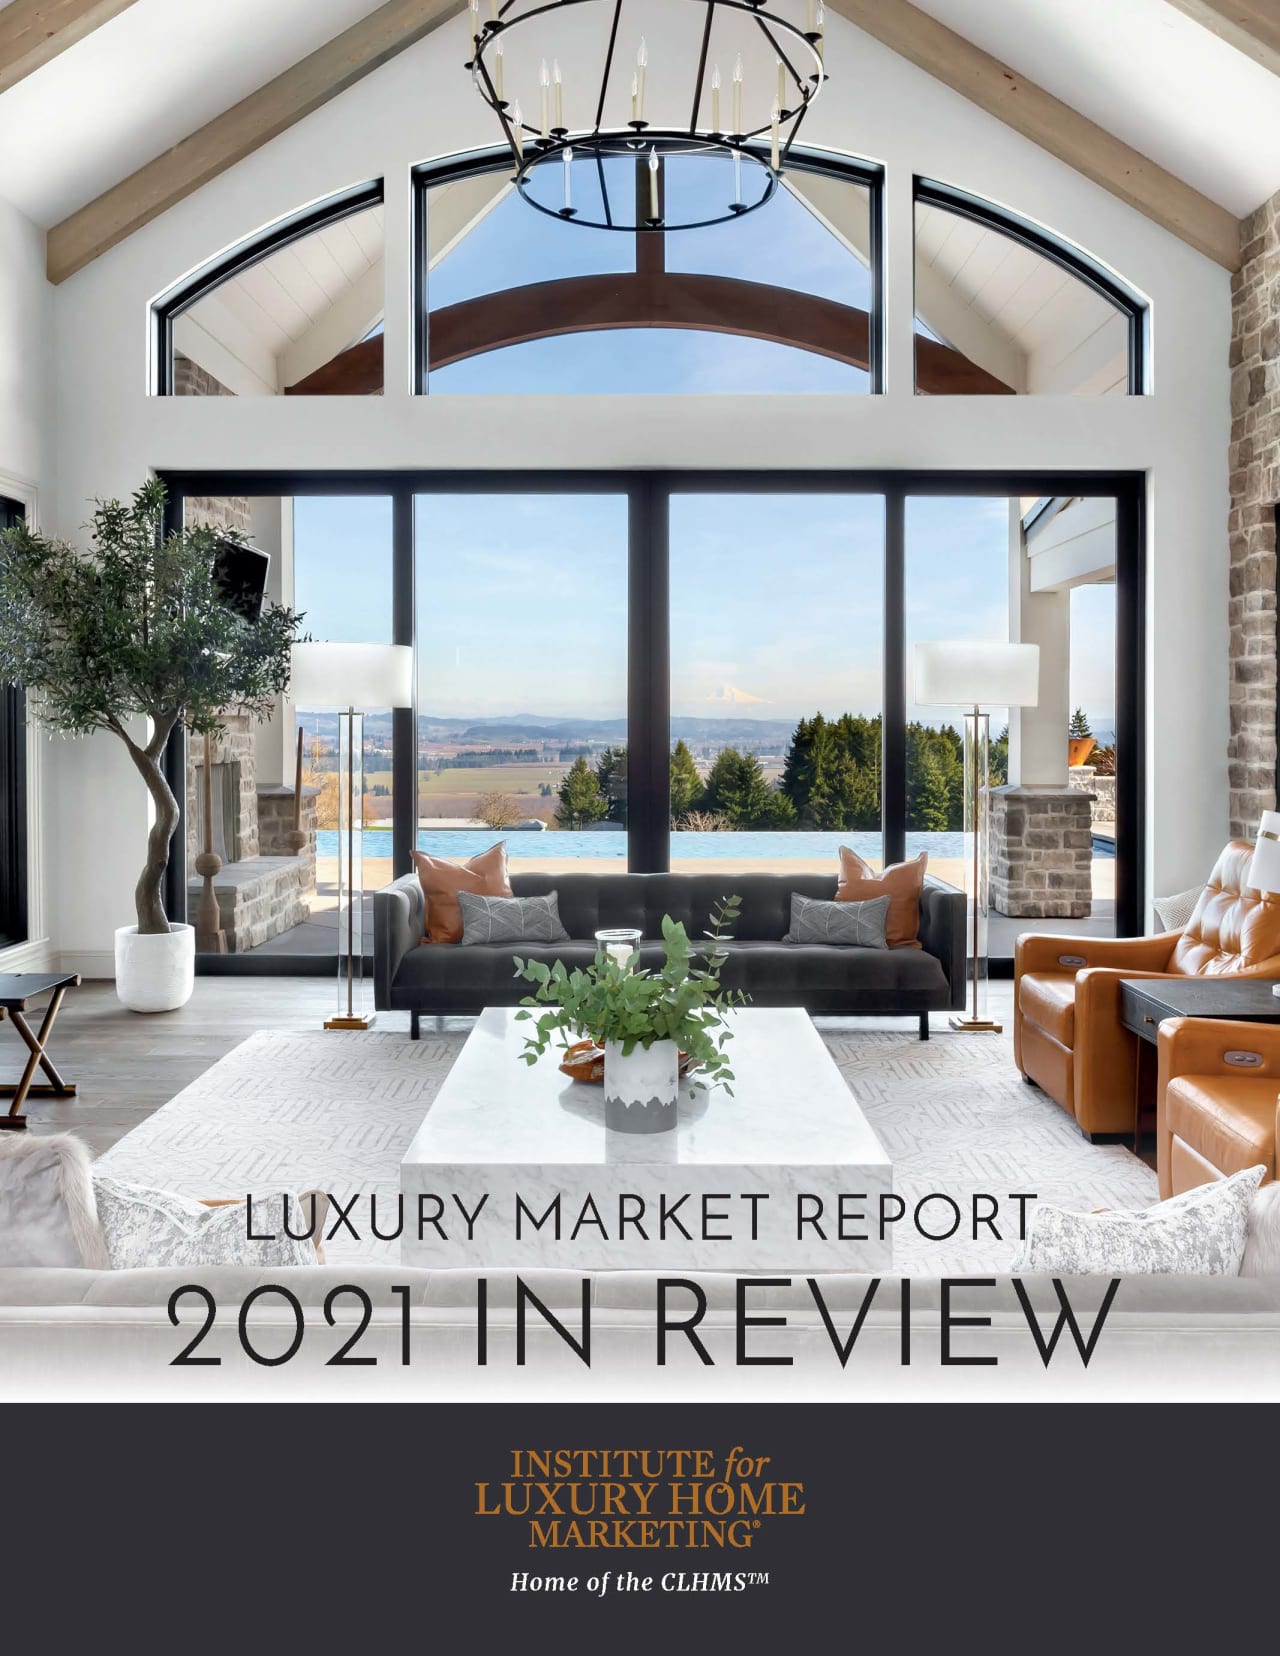 Luxury Market Report - 2021 in Review